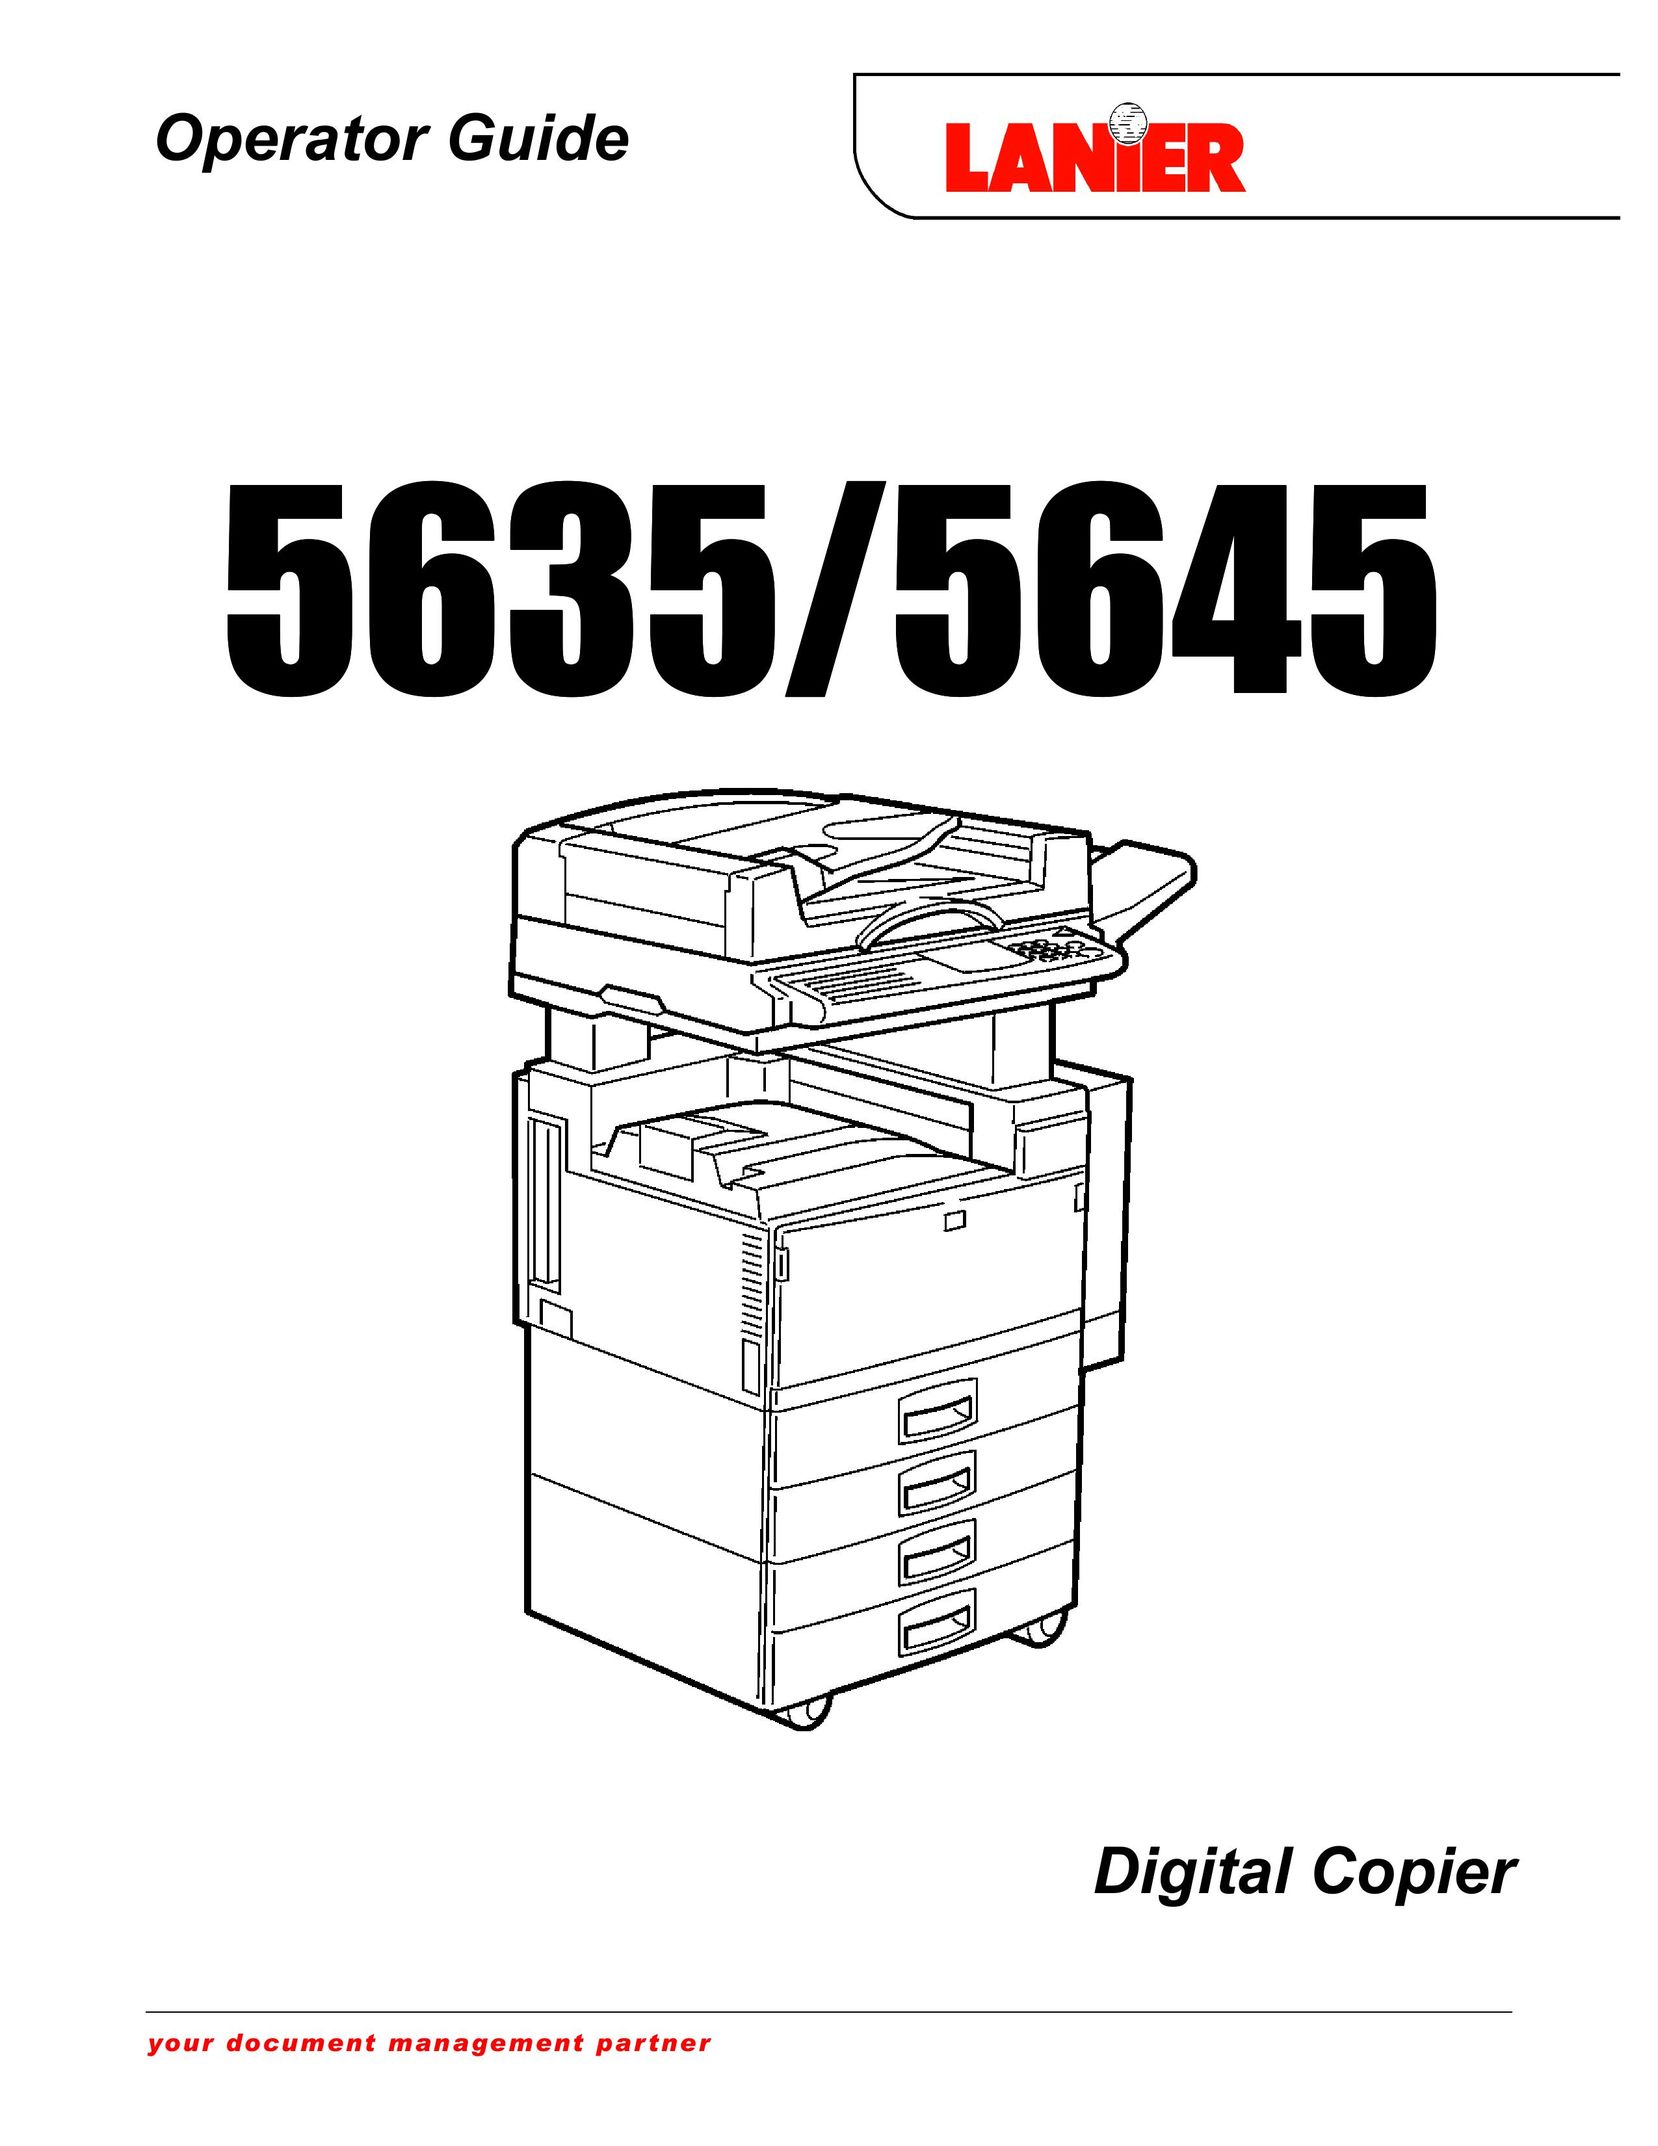 Lanier 5645 All in One Printer User Manual